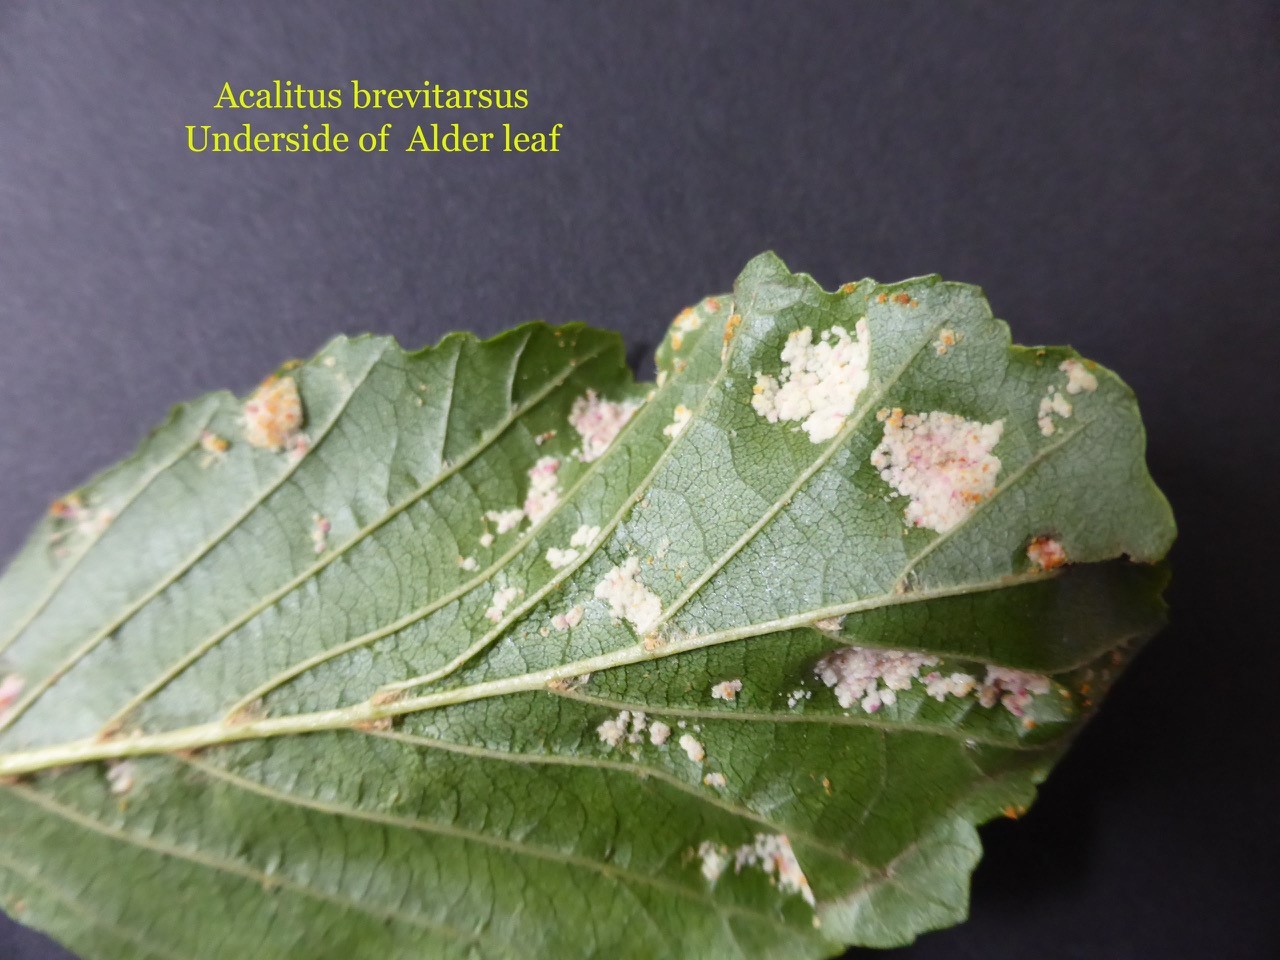 Acalitus brevitarsus showing underside of leaf, caused by a mite